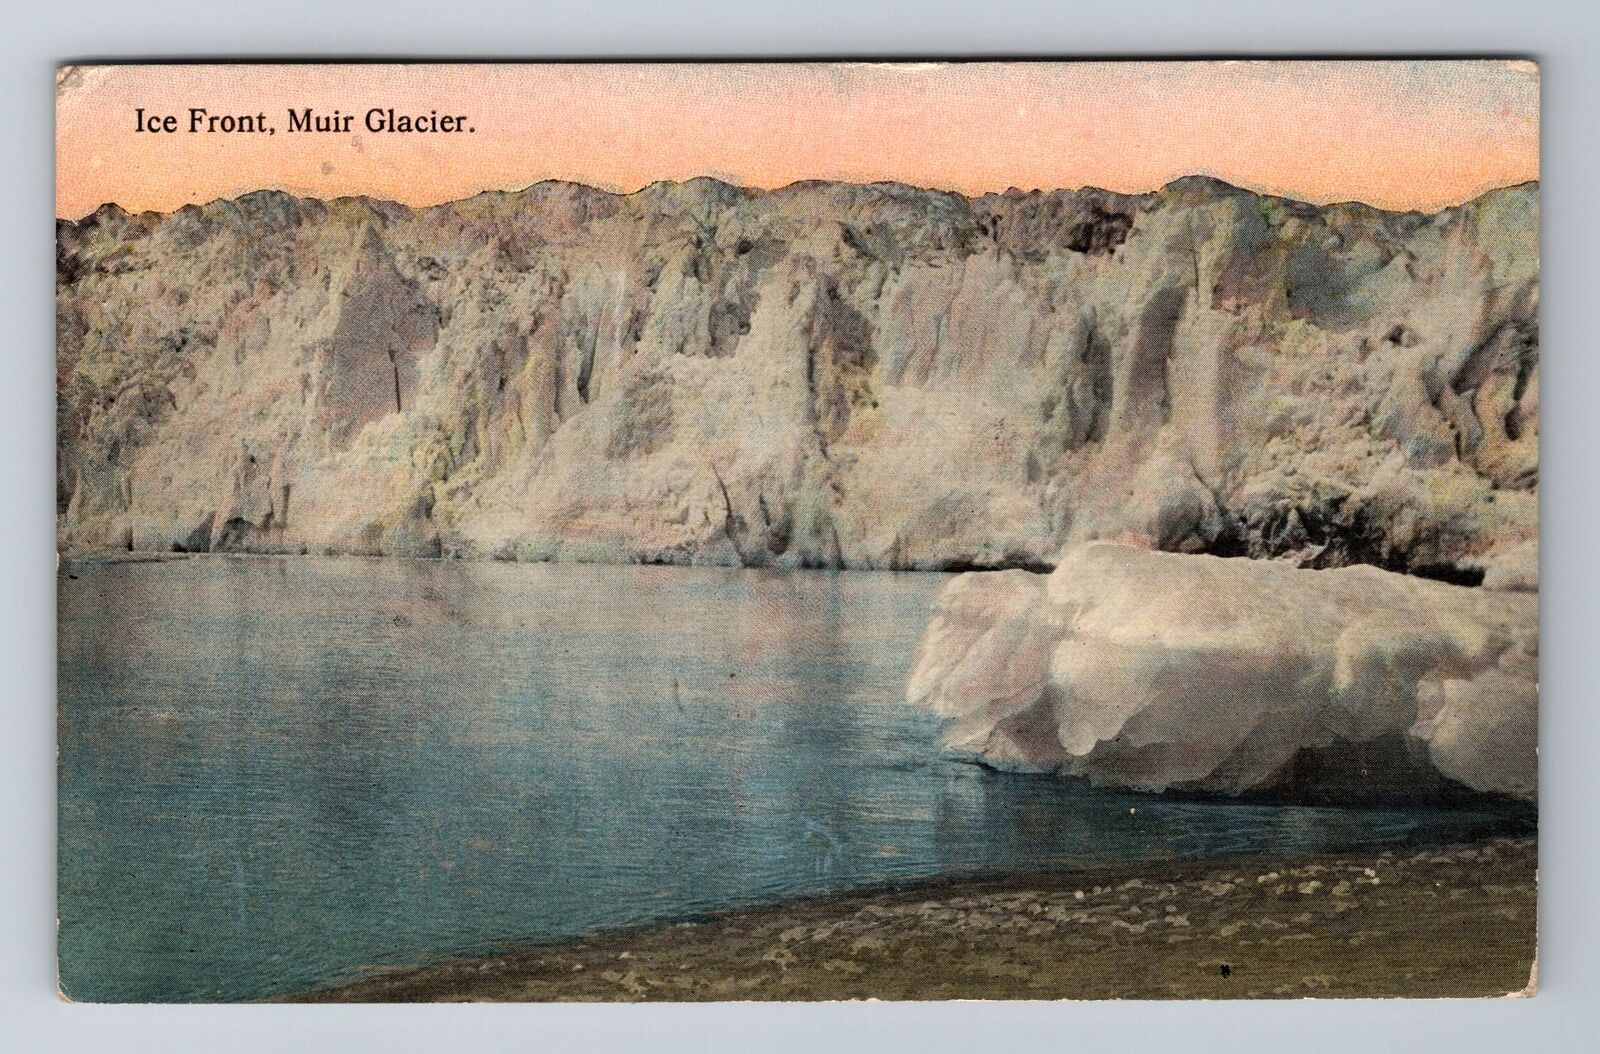 Muir Glacier, AK-Alaska, Ice Front, Scenic View Antique, Vintage Postcard